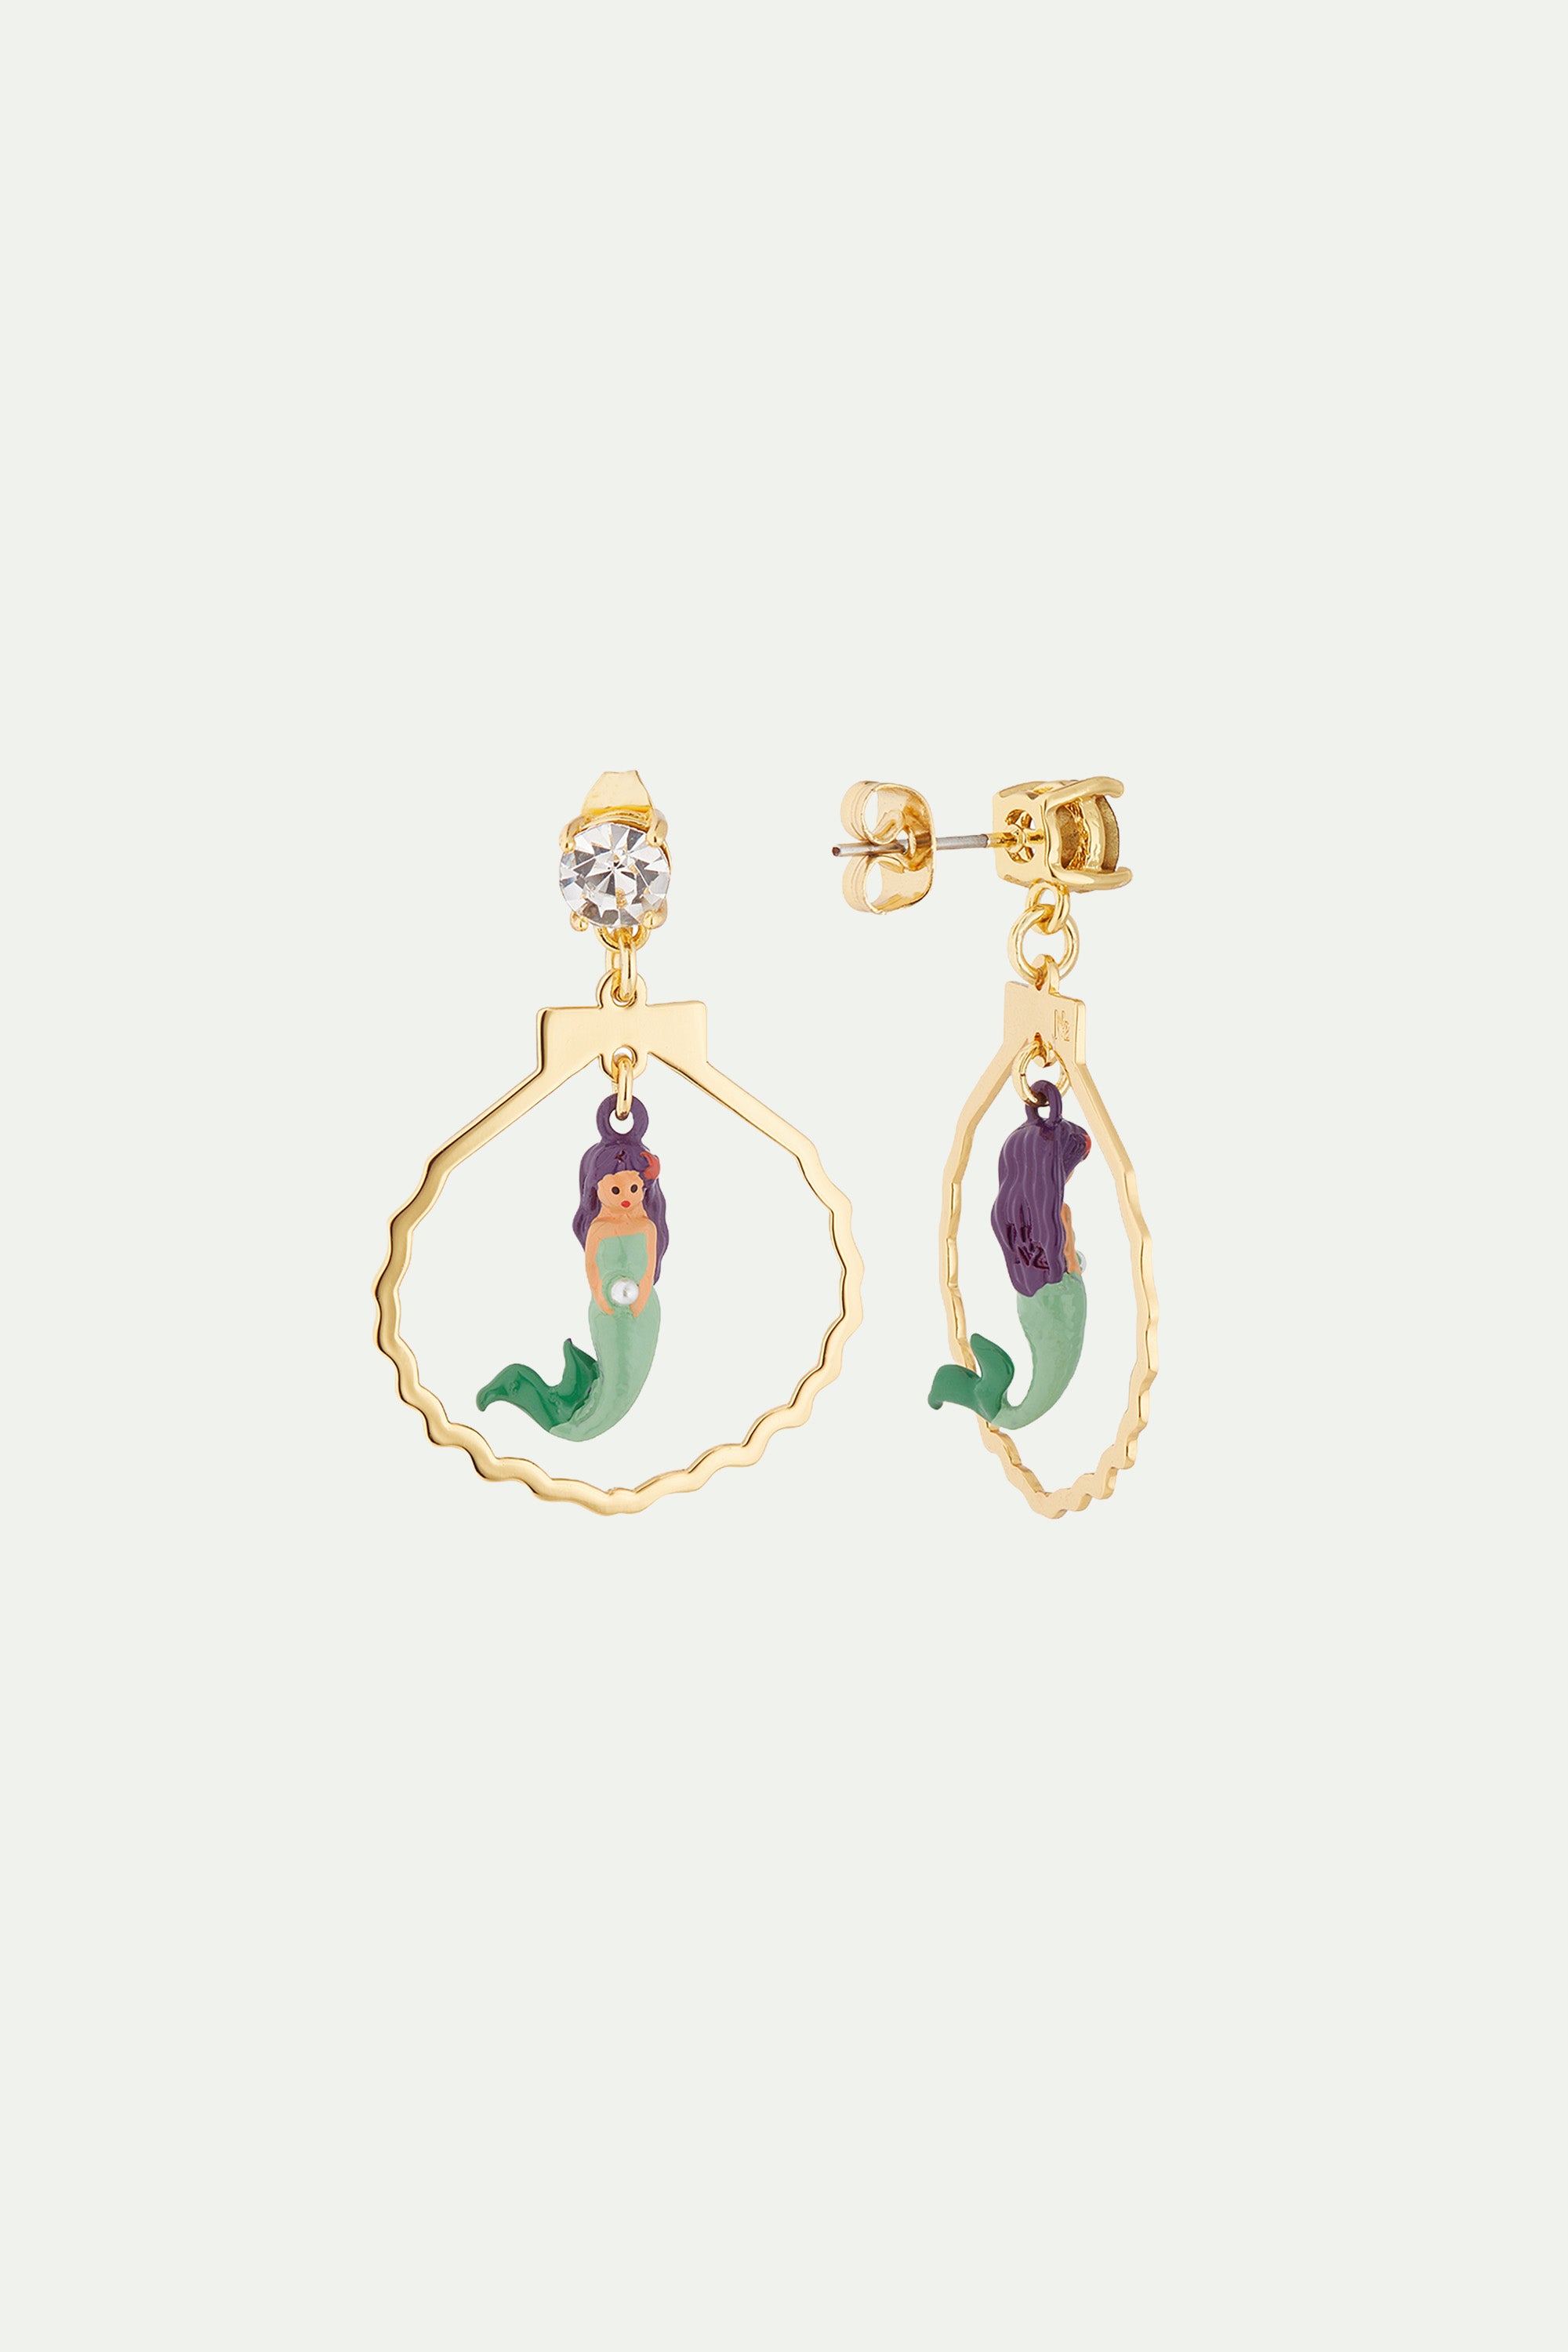 Mermaid, cut stone, seashell shape post earrings